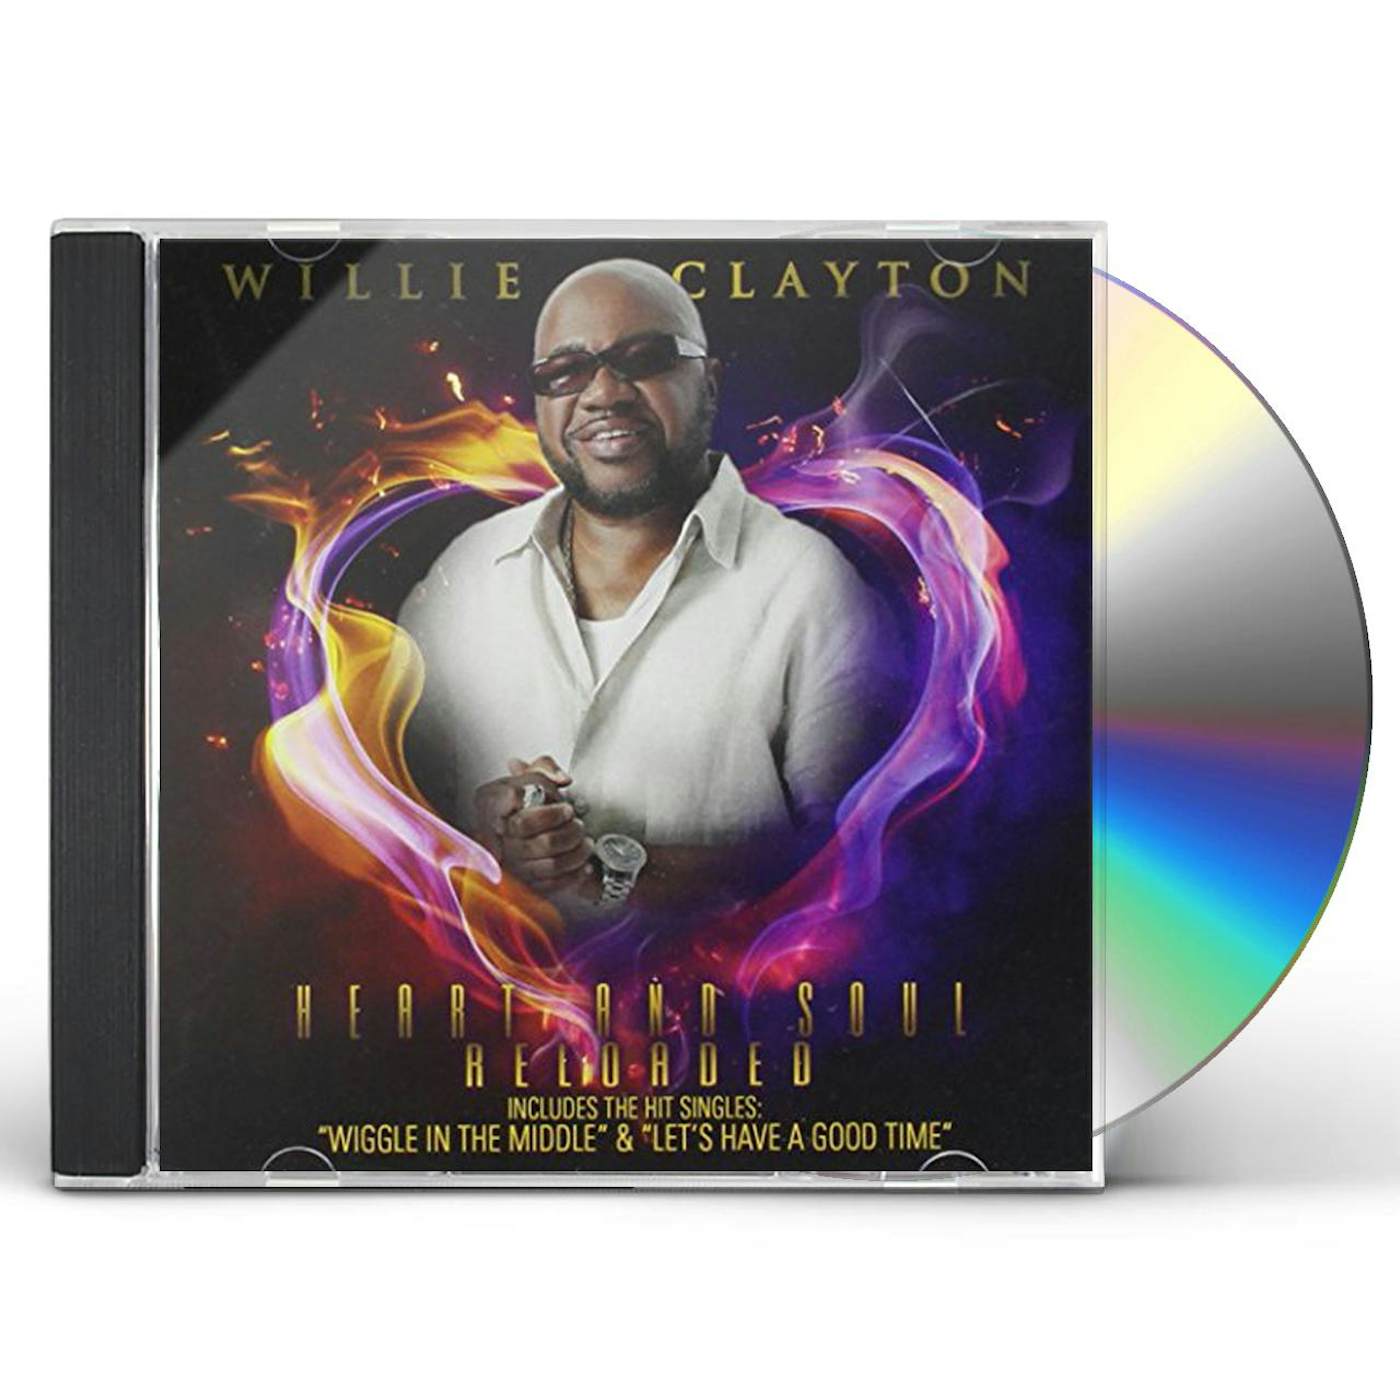 Willie Clayton HEART & SOUL RELOADED CD